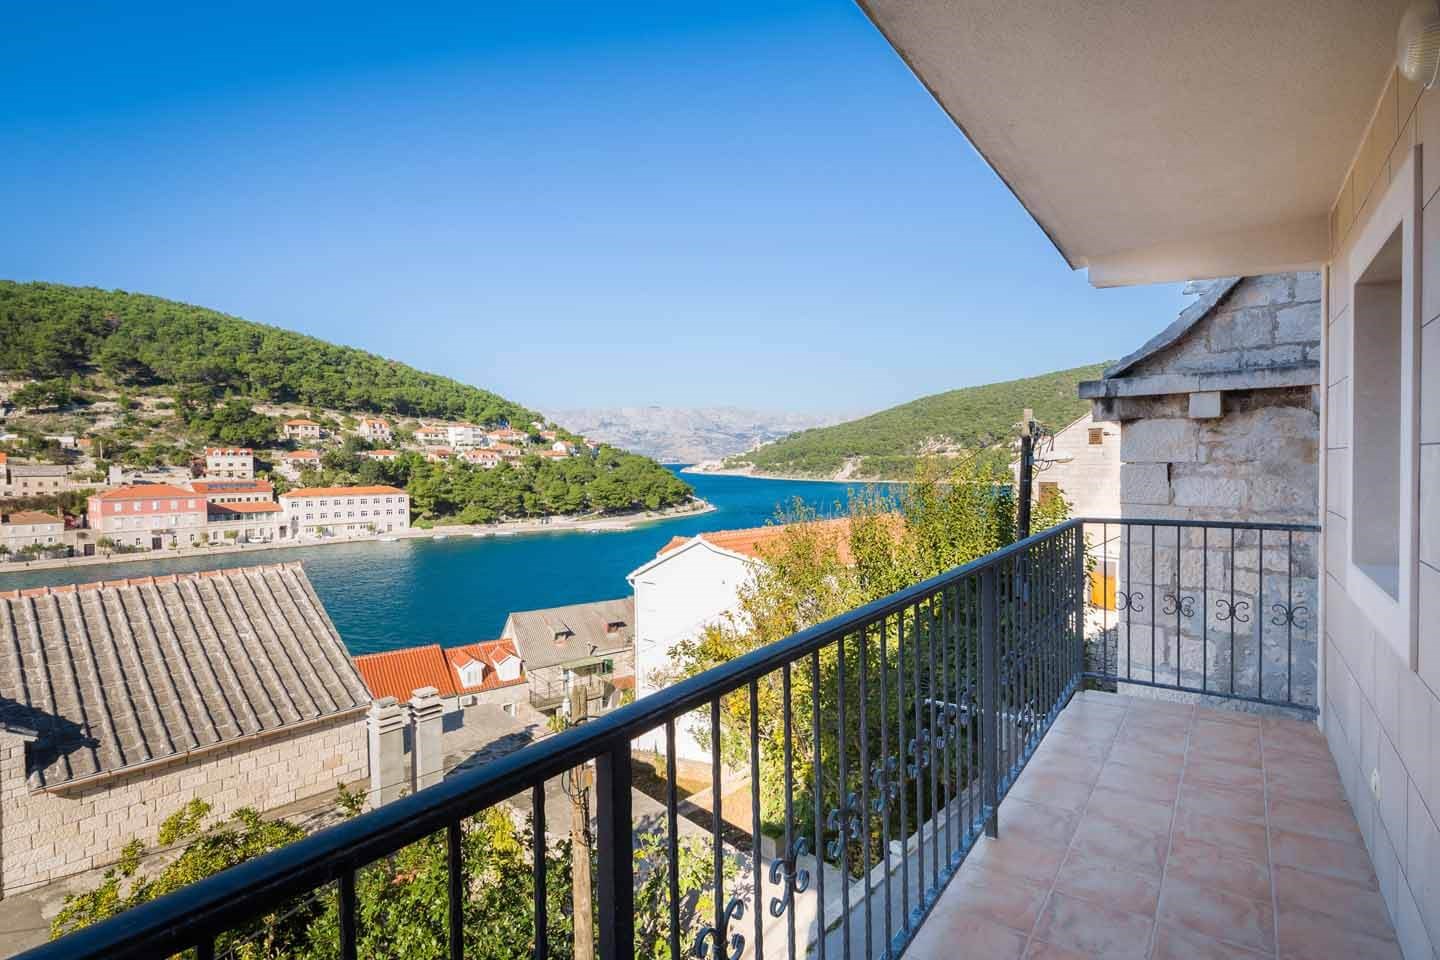 Villa-Prunella-balcony-view.jpg